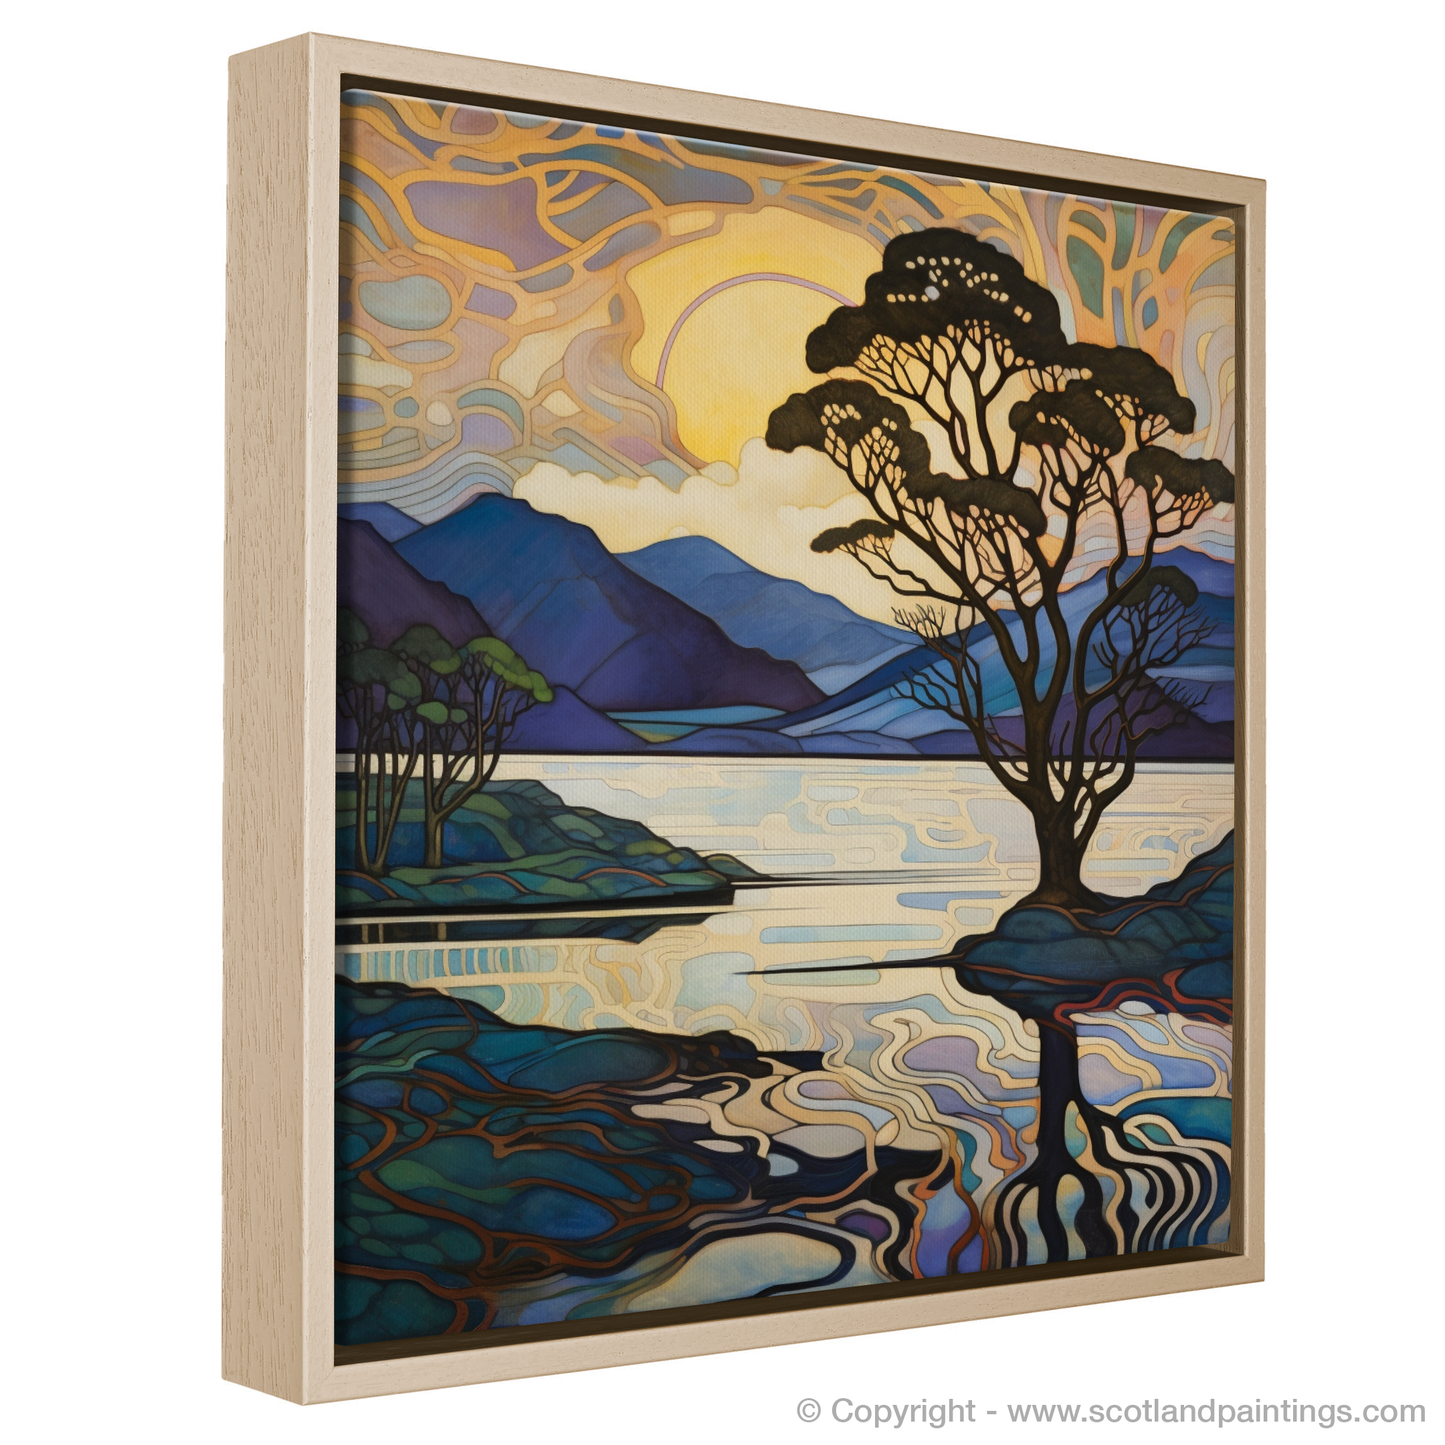 Painting and Art Print of Loch Lomond entitled "Art Nouveau Elegance: A Loch Lomond Masterpiece".